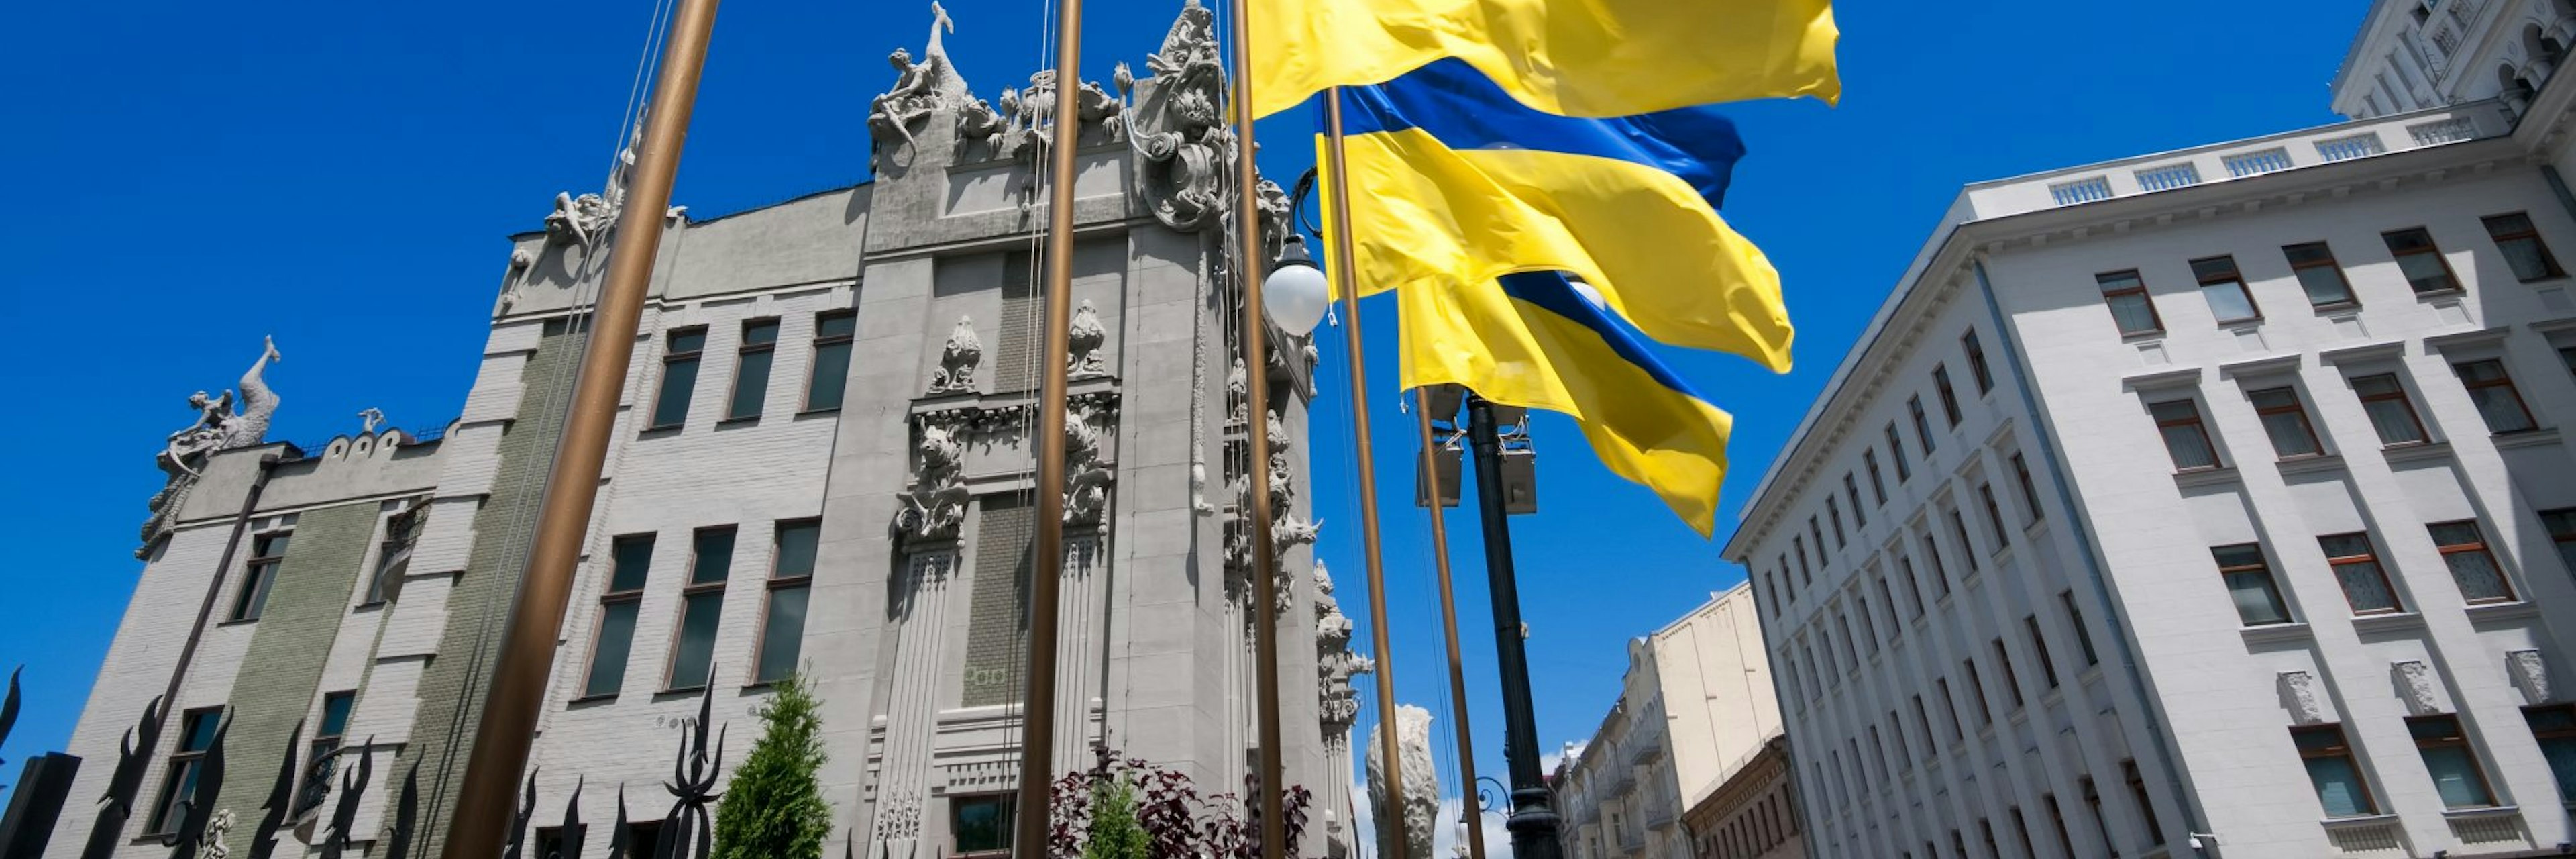 Flags in Ukraine